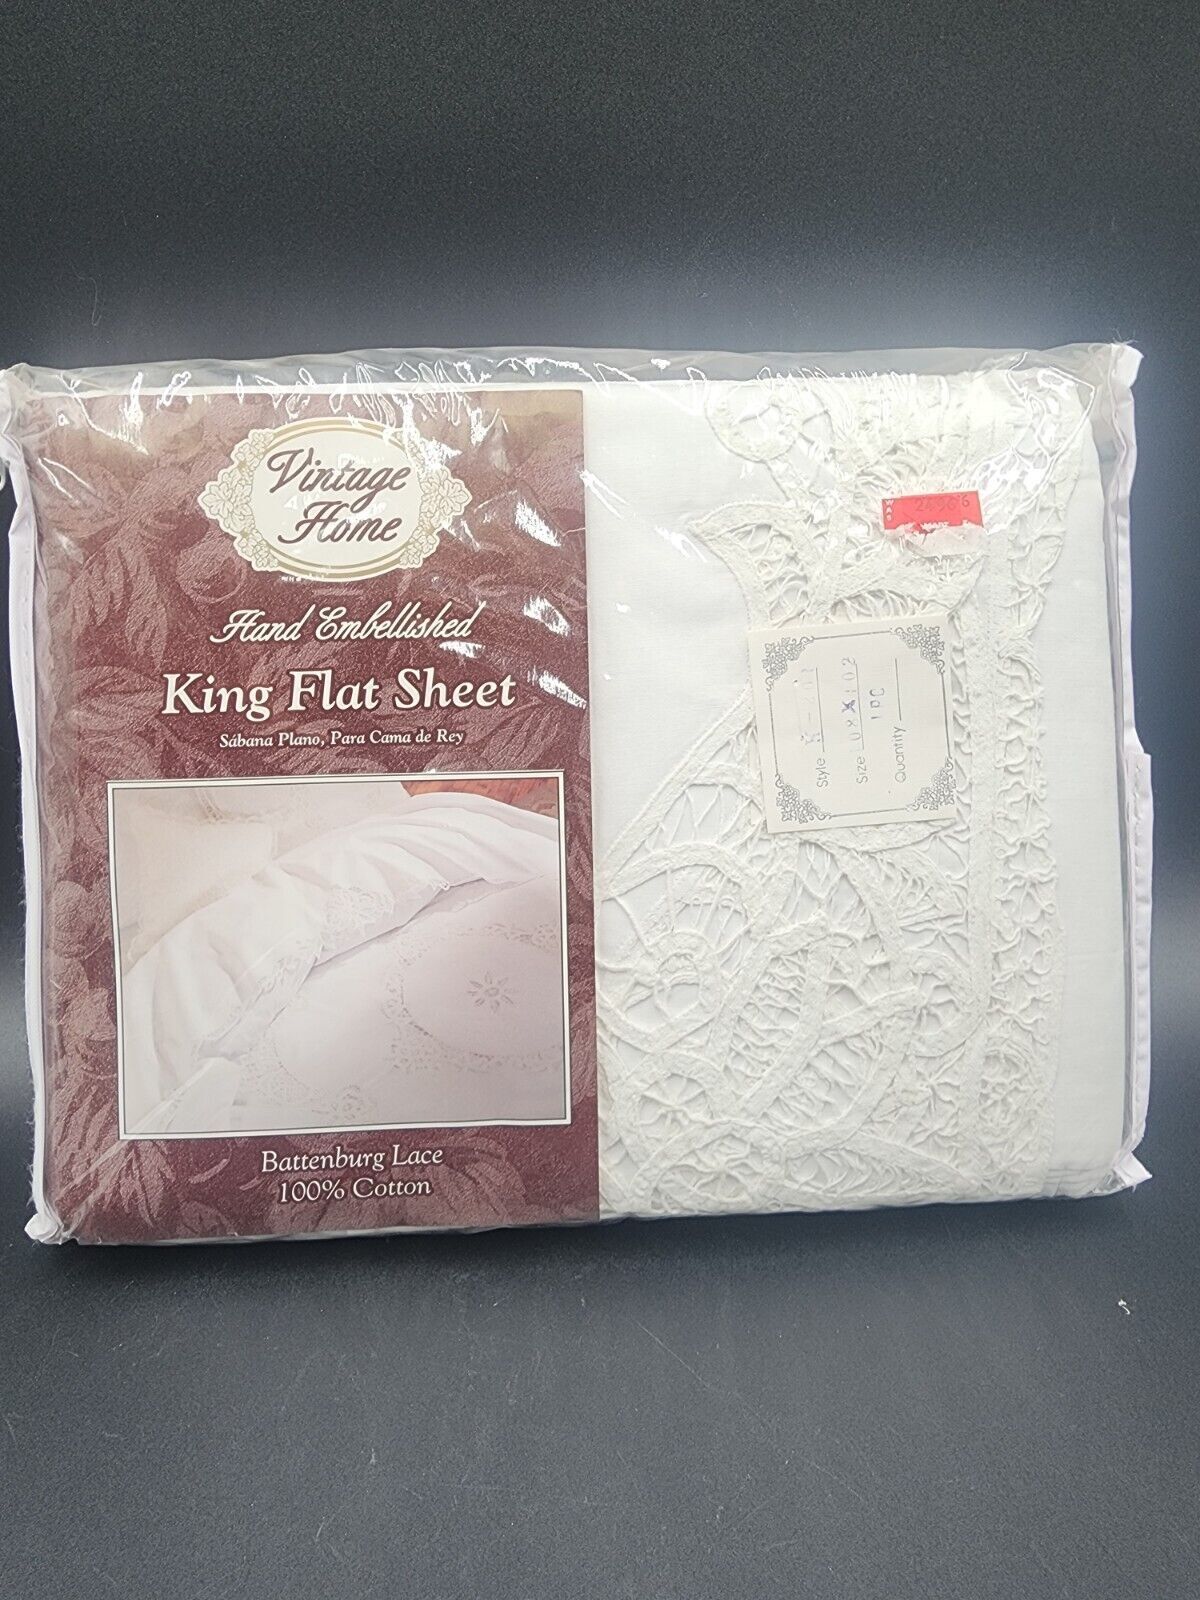 1993 Vintage Home King Flat Sheet Battenburg Lace 100% Cotton 108” X 102”